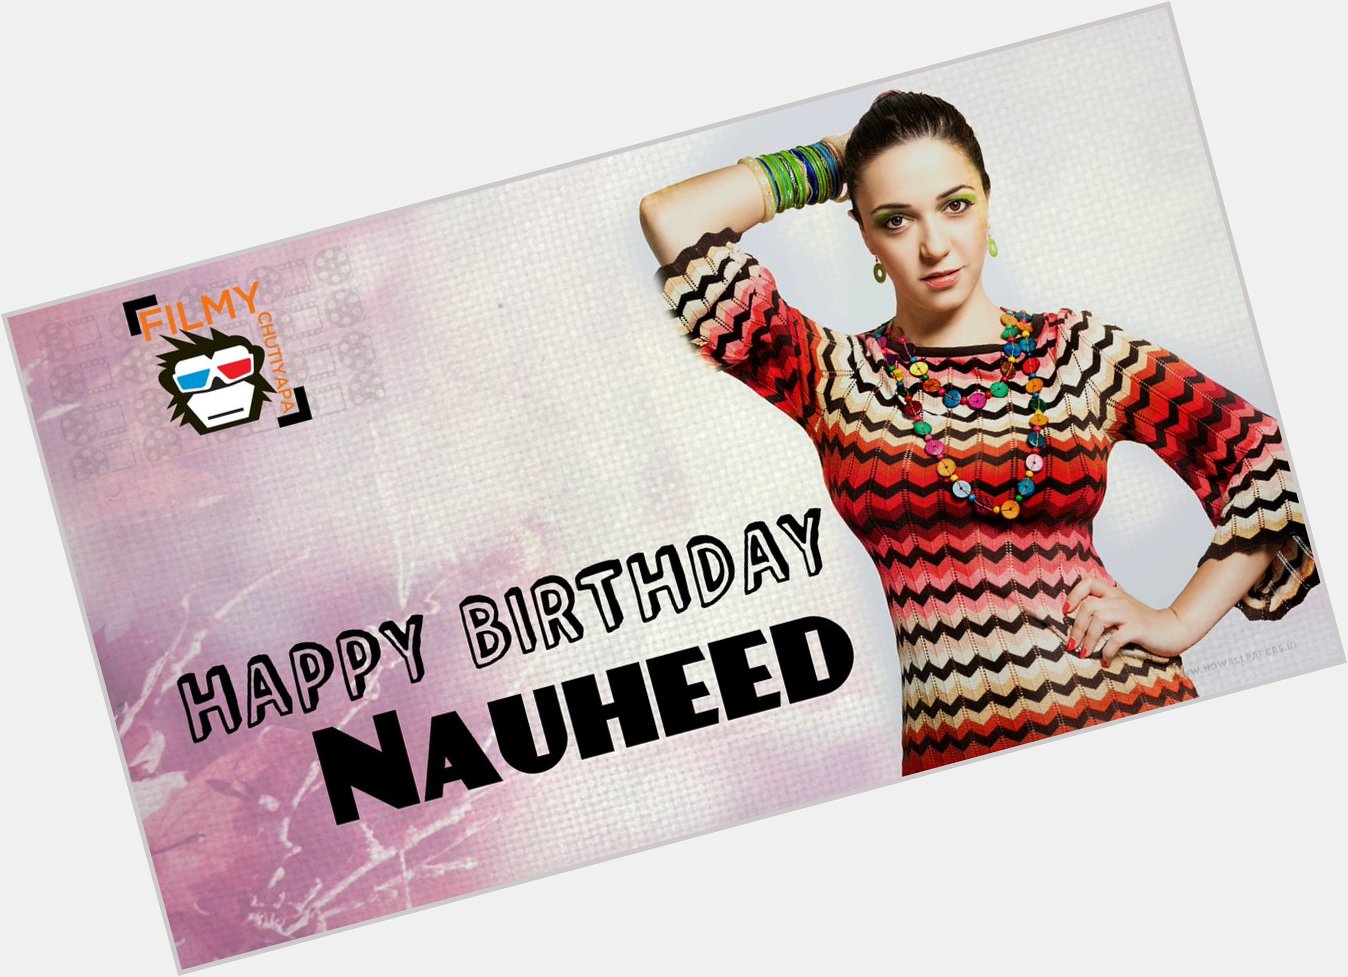 Happy birthday to the beautiful and graceful Nauheed Cyrusi. 